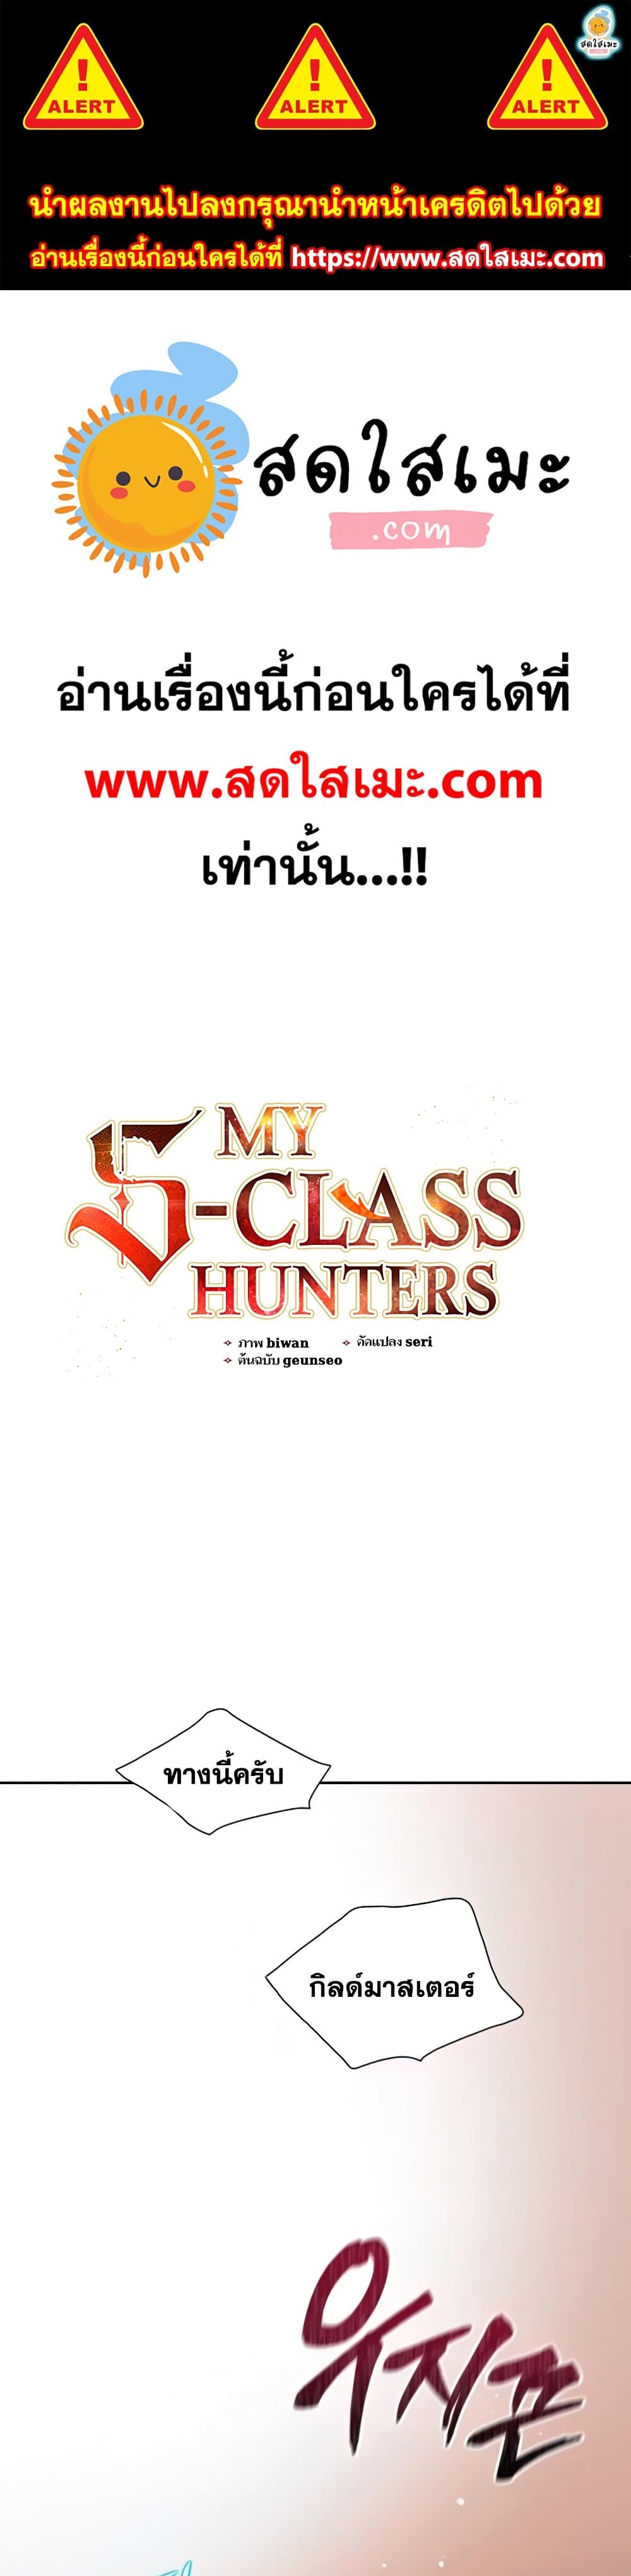 The S-Classes That I Raised